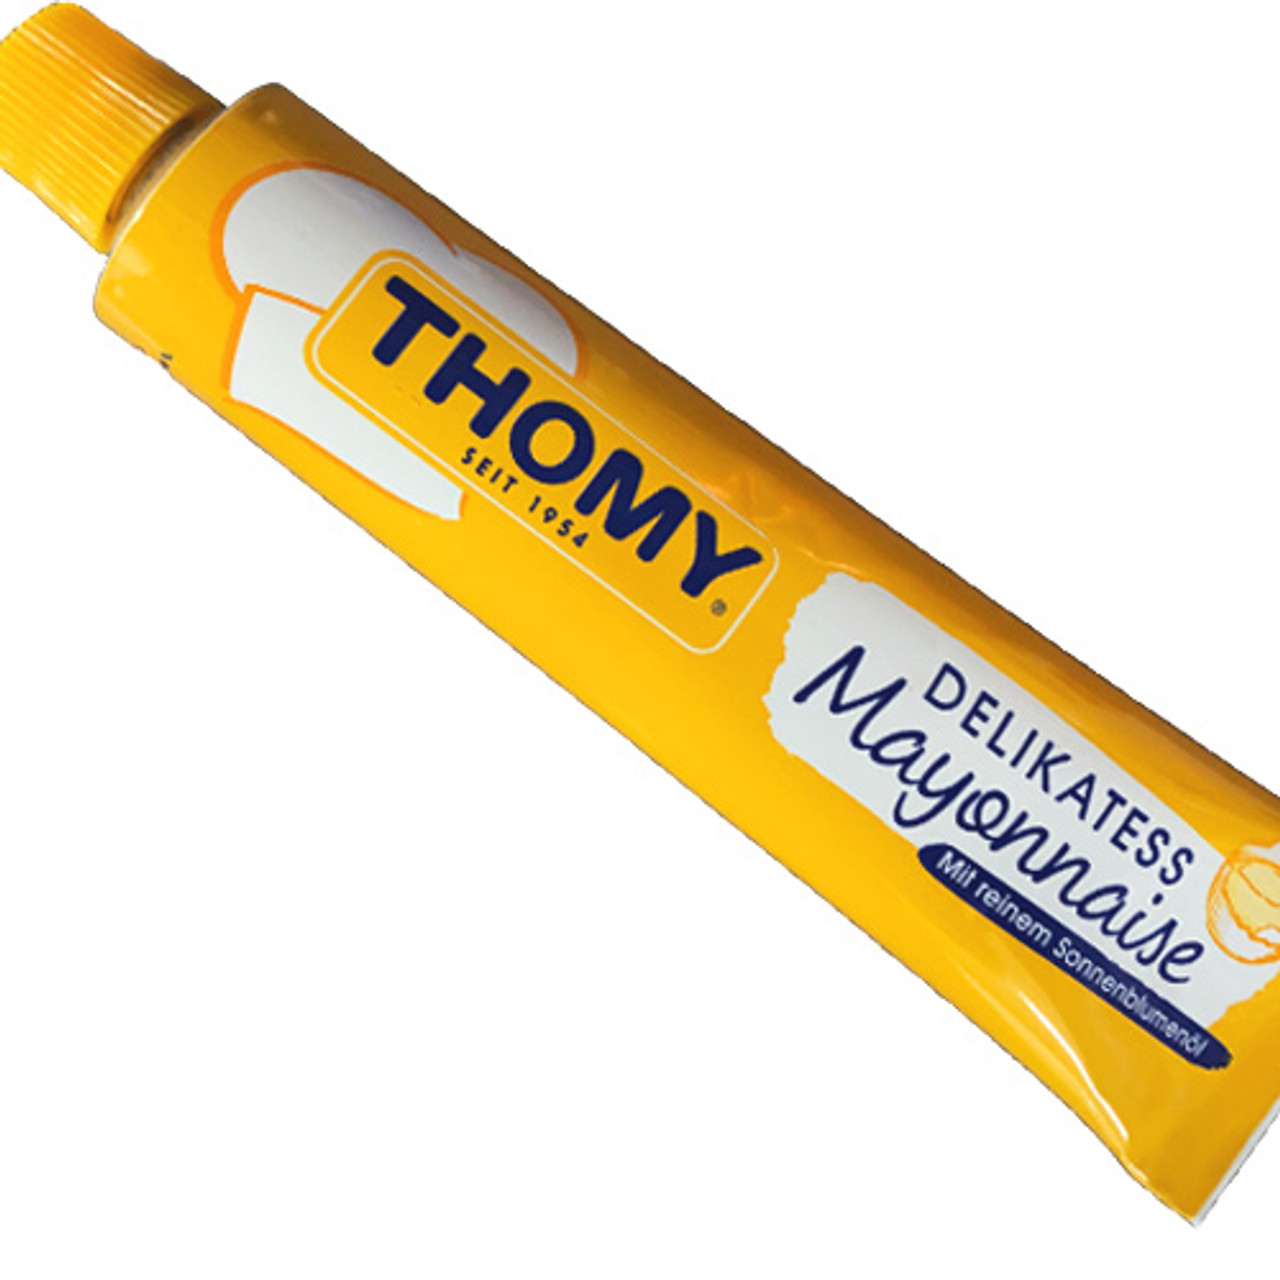 Thomy Delicatessen Mayonnaise in tube 3.5 oz - The Taste of Germany